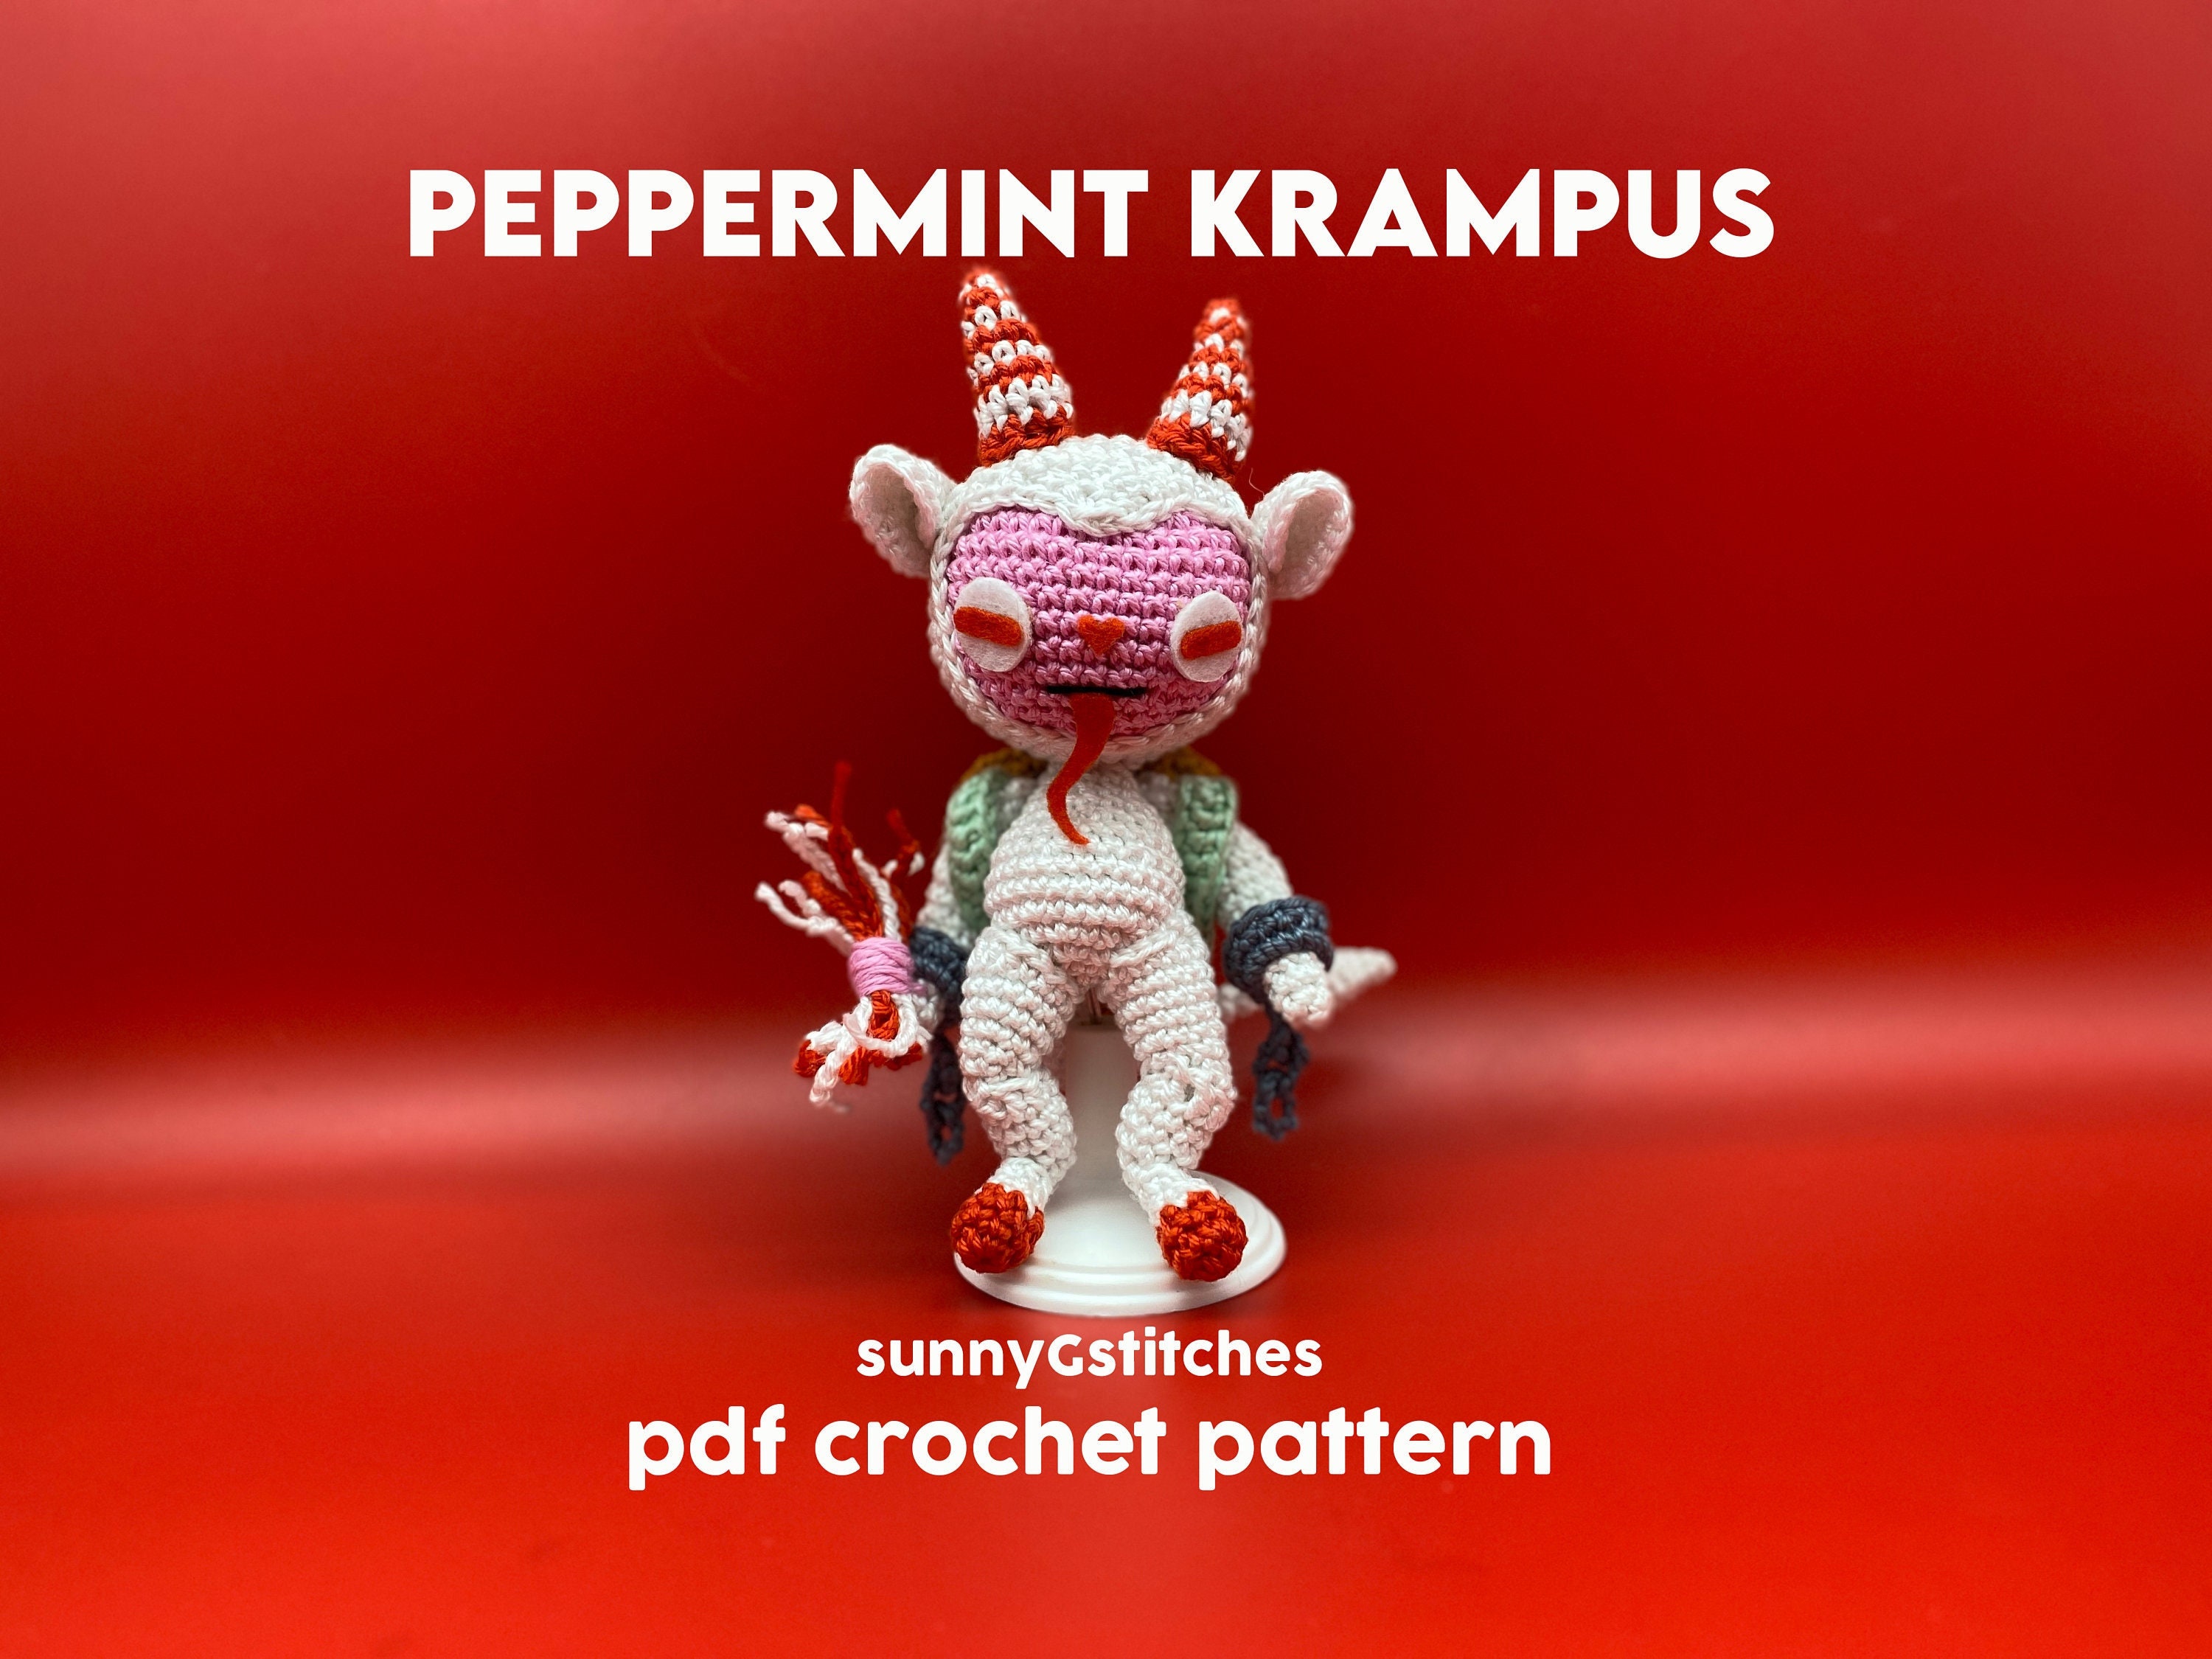 Cute Critters Set 7: Cthulhu Jersey Devil Krampus Mothman Ravenous Skeletal Crochet  Amigurumi Pattern DIGITAL PDF by Crafty Intentions -  Norway